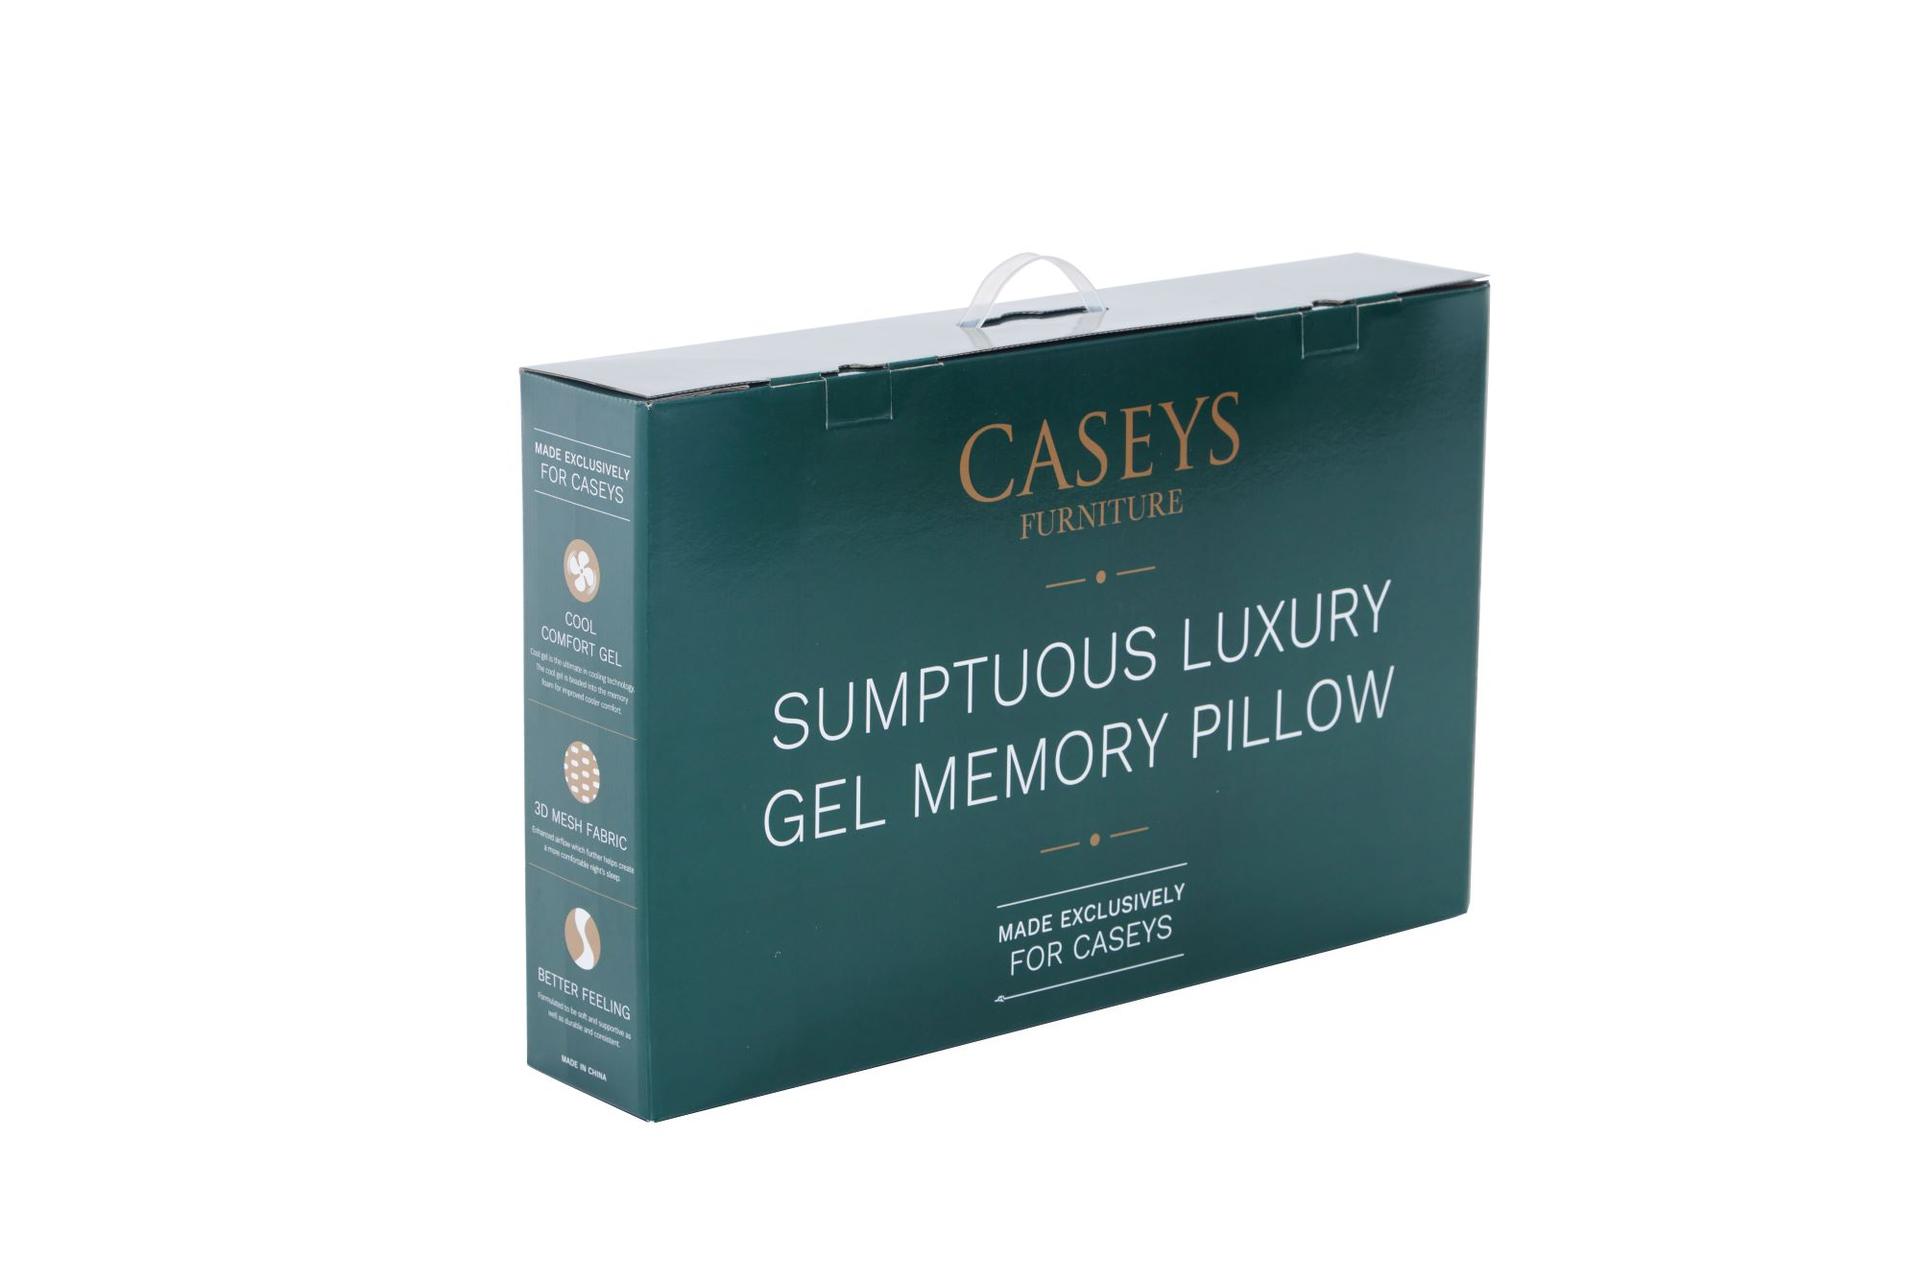 Caseys Sumptuous Memory Pillow